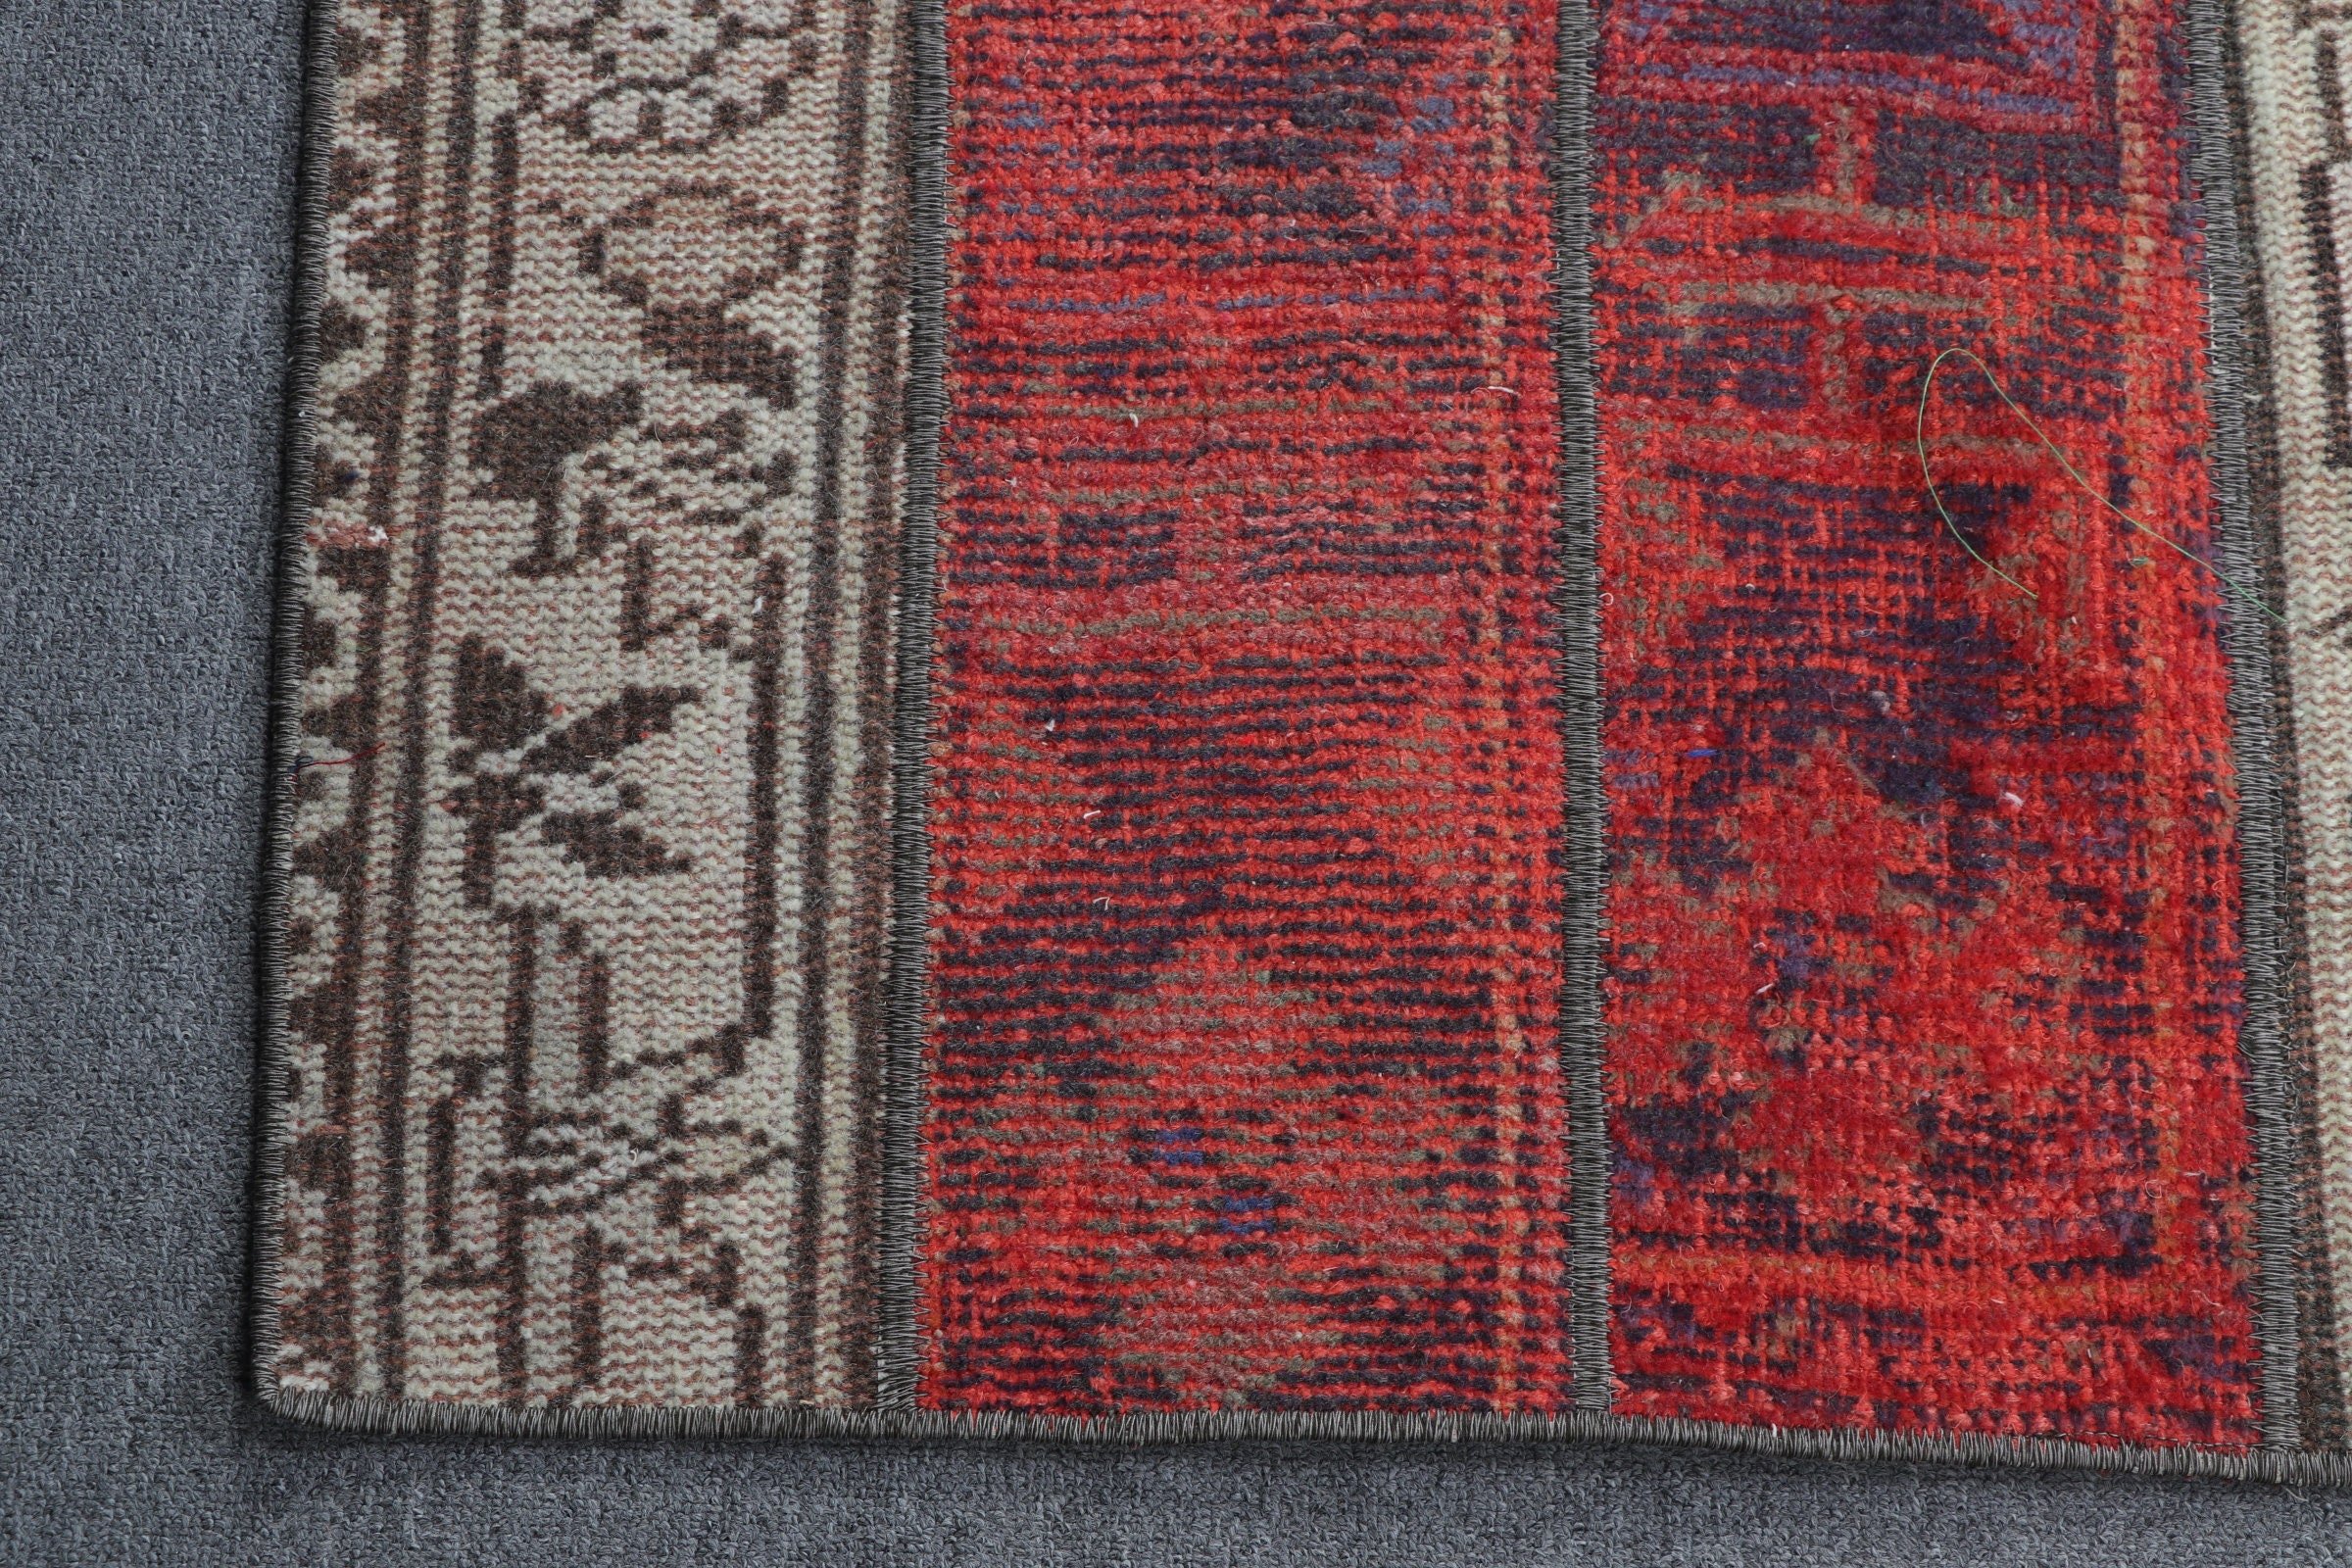 Turkish Rug, Red  2.3x3.7 ft Small Rug, Tribal Rug, Antique Rug, Vintage Rug, Wall Hanging Rugs, Bedroom Rugs, Bath Rug